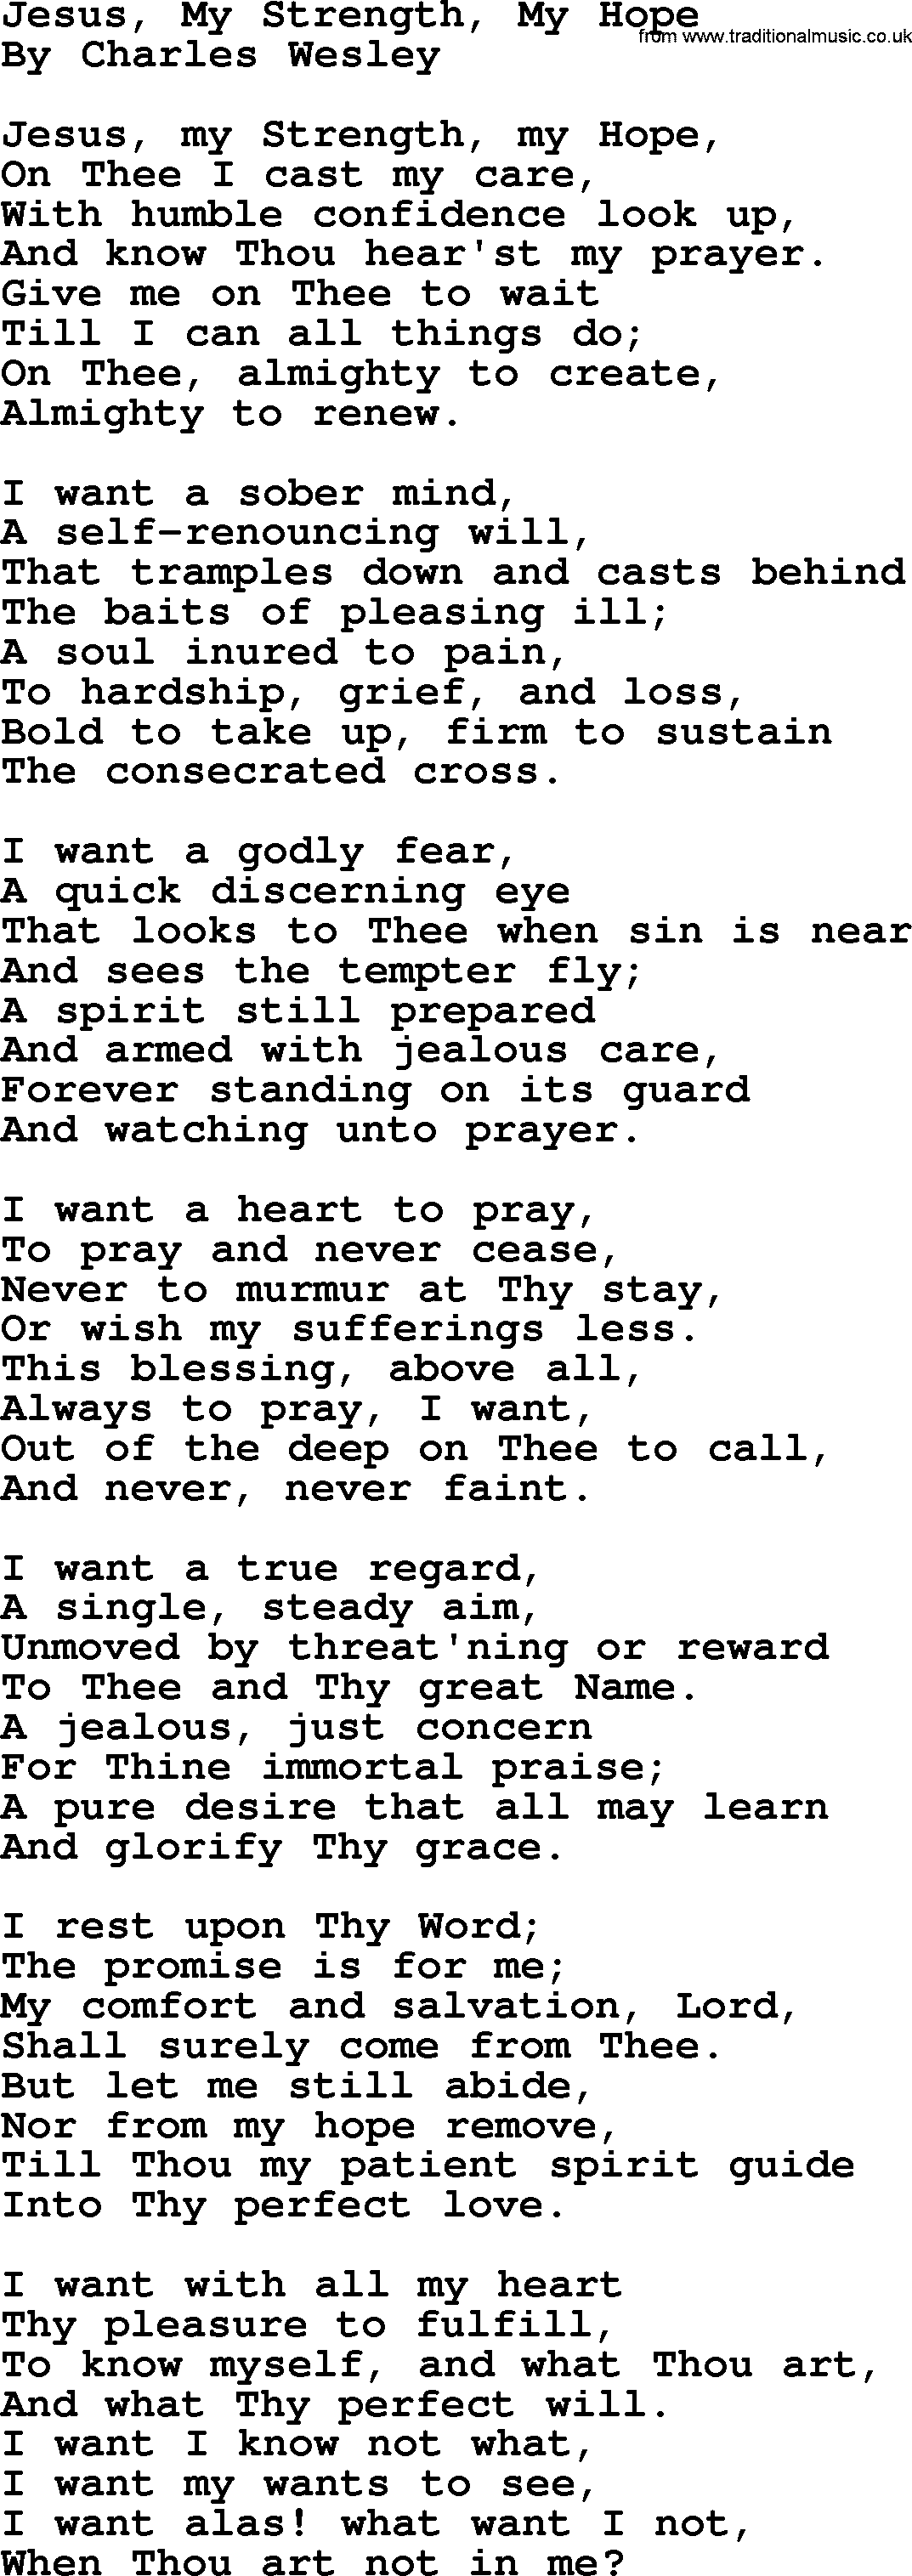 Charles Wesley hymn: Jesus, My Strength, My Hope, lyrics